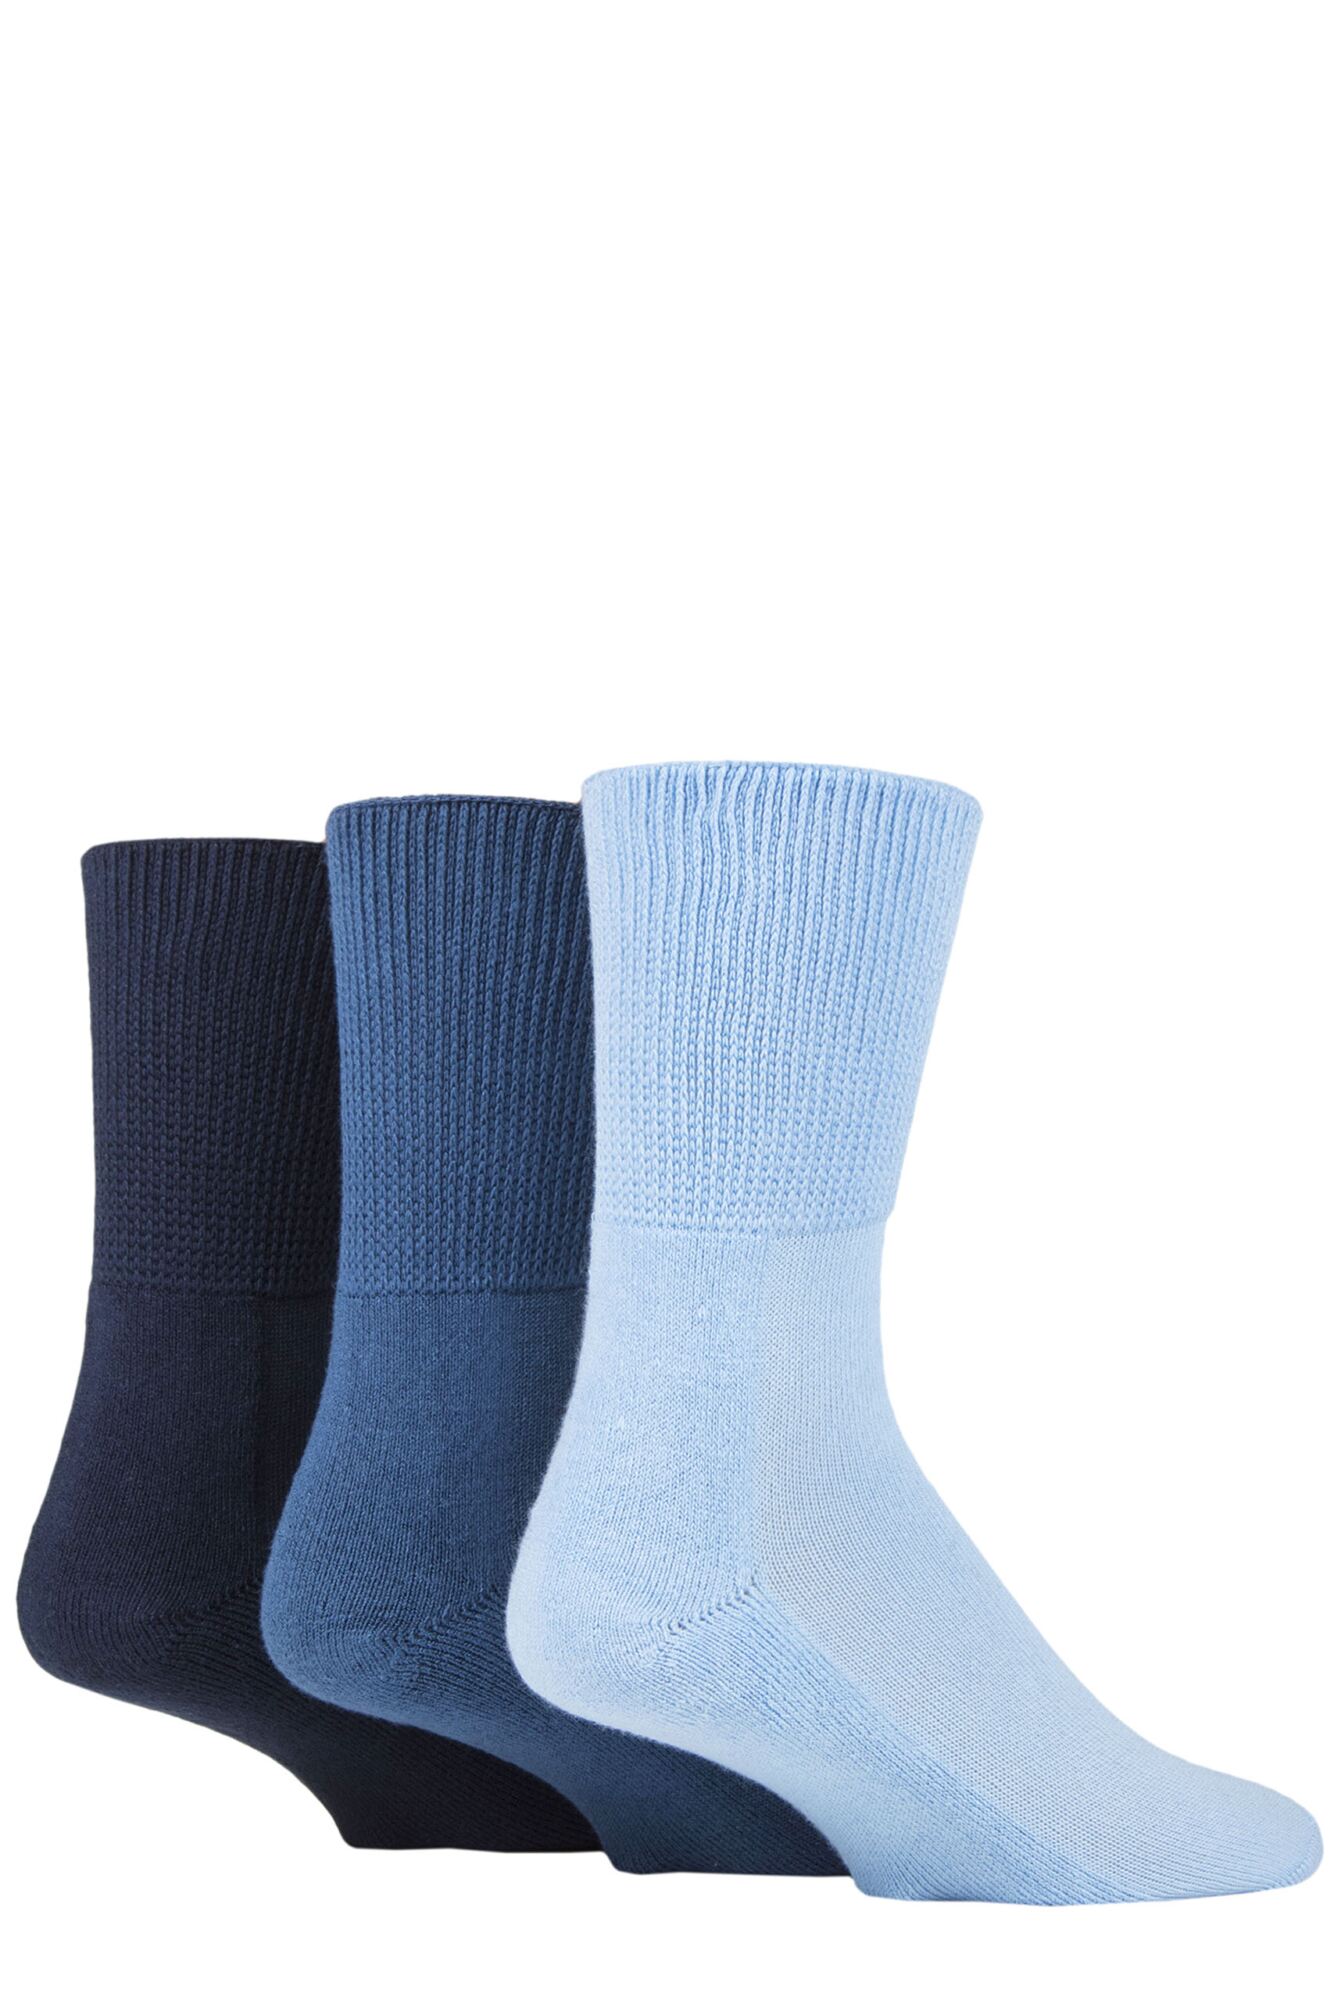 SOCKSHOP Iomi Footnurse Bamboo Cushioned Foot Diabetic Socks from SockShop